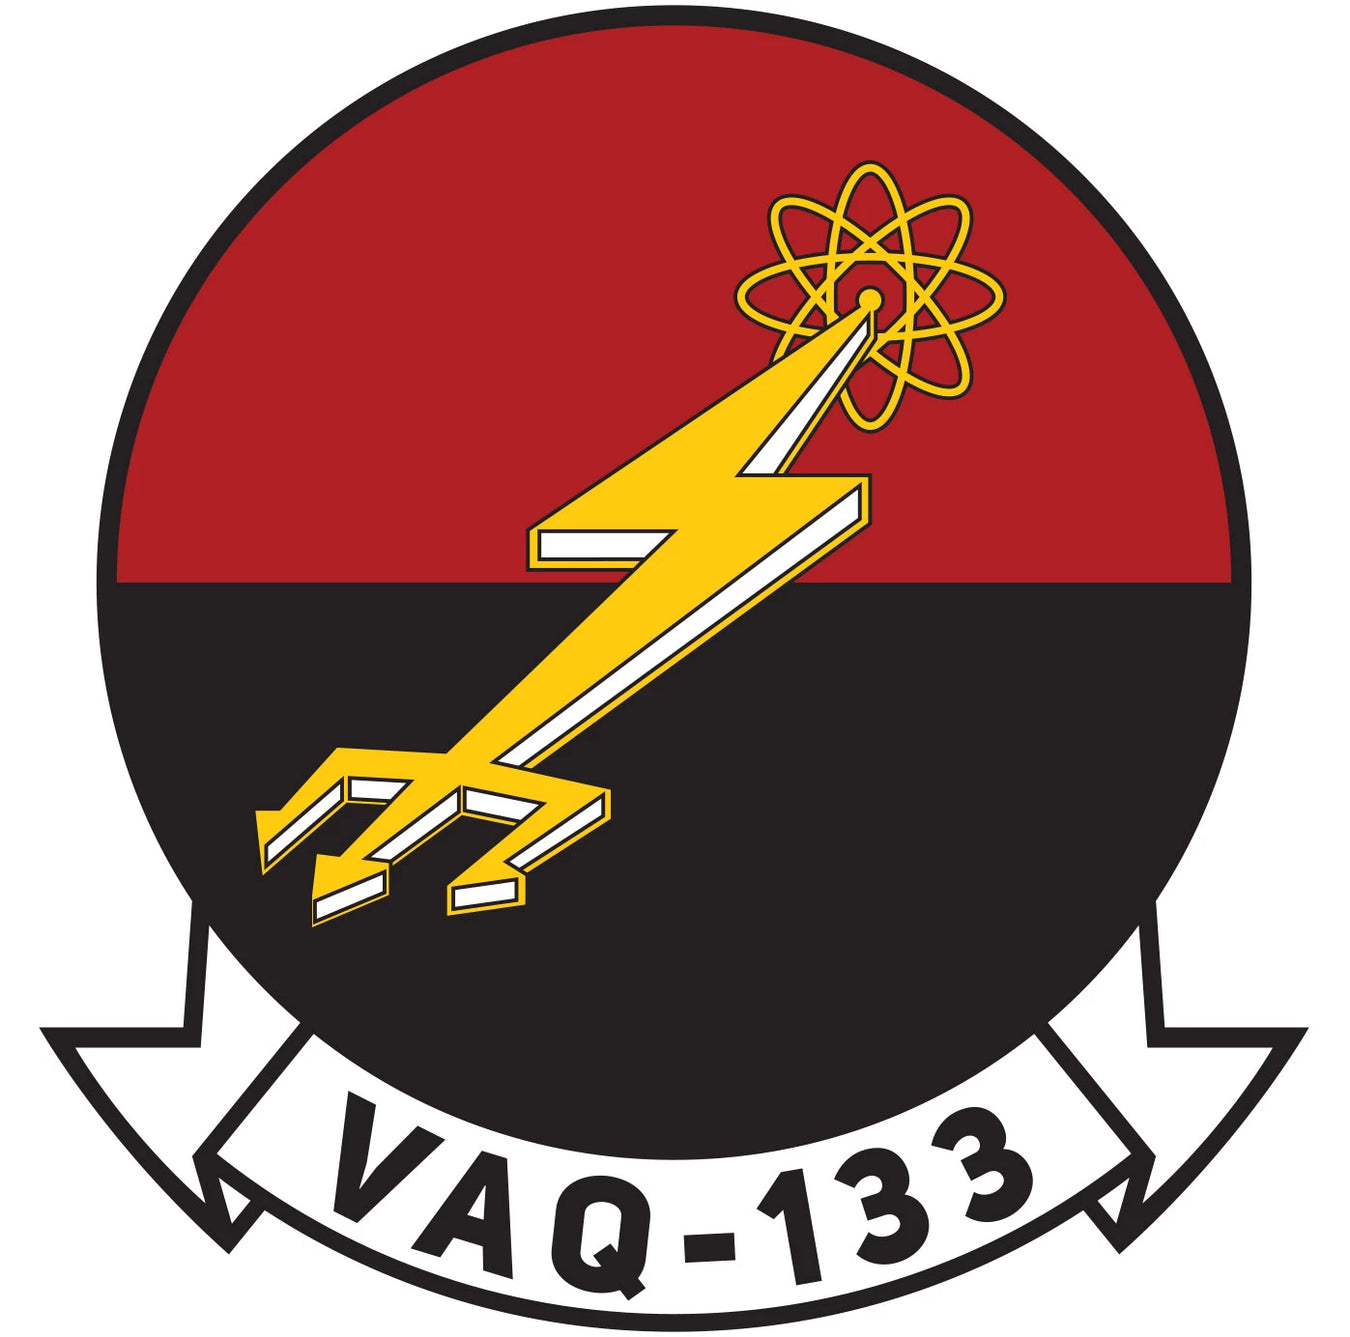 Electronic Attack Squadron 133 (VAQ-133)